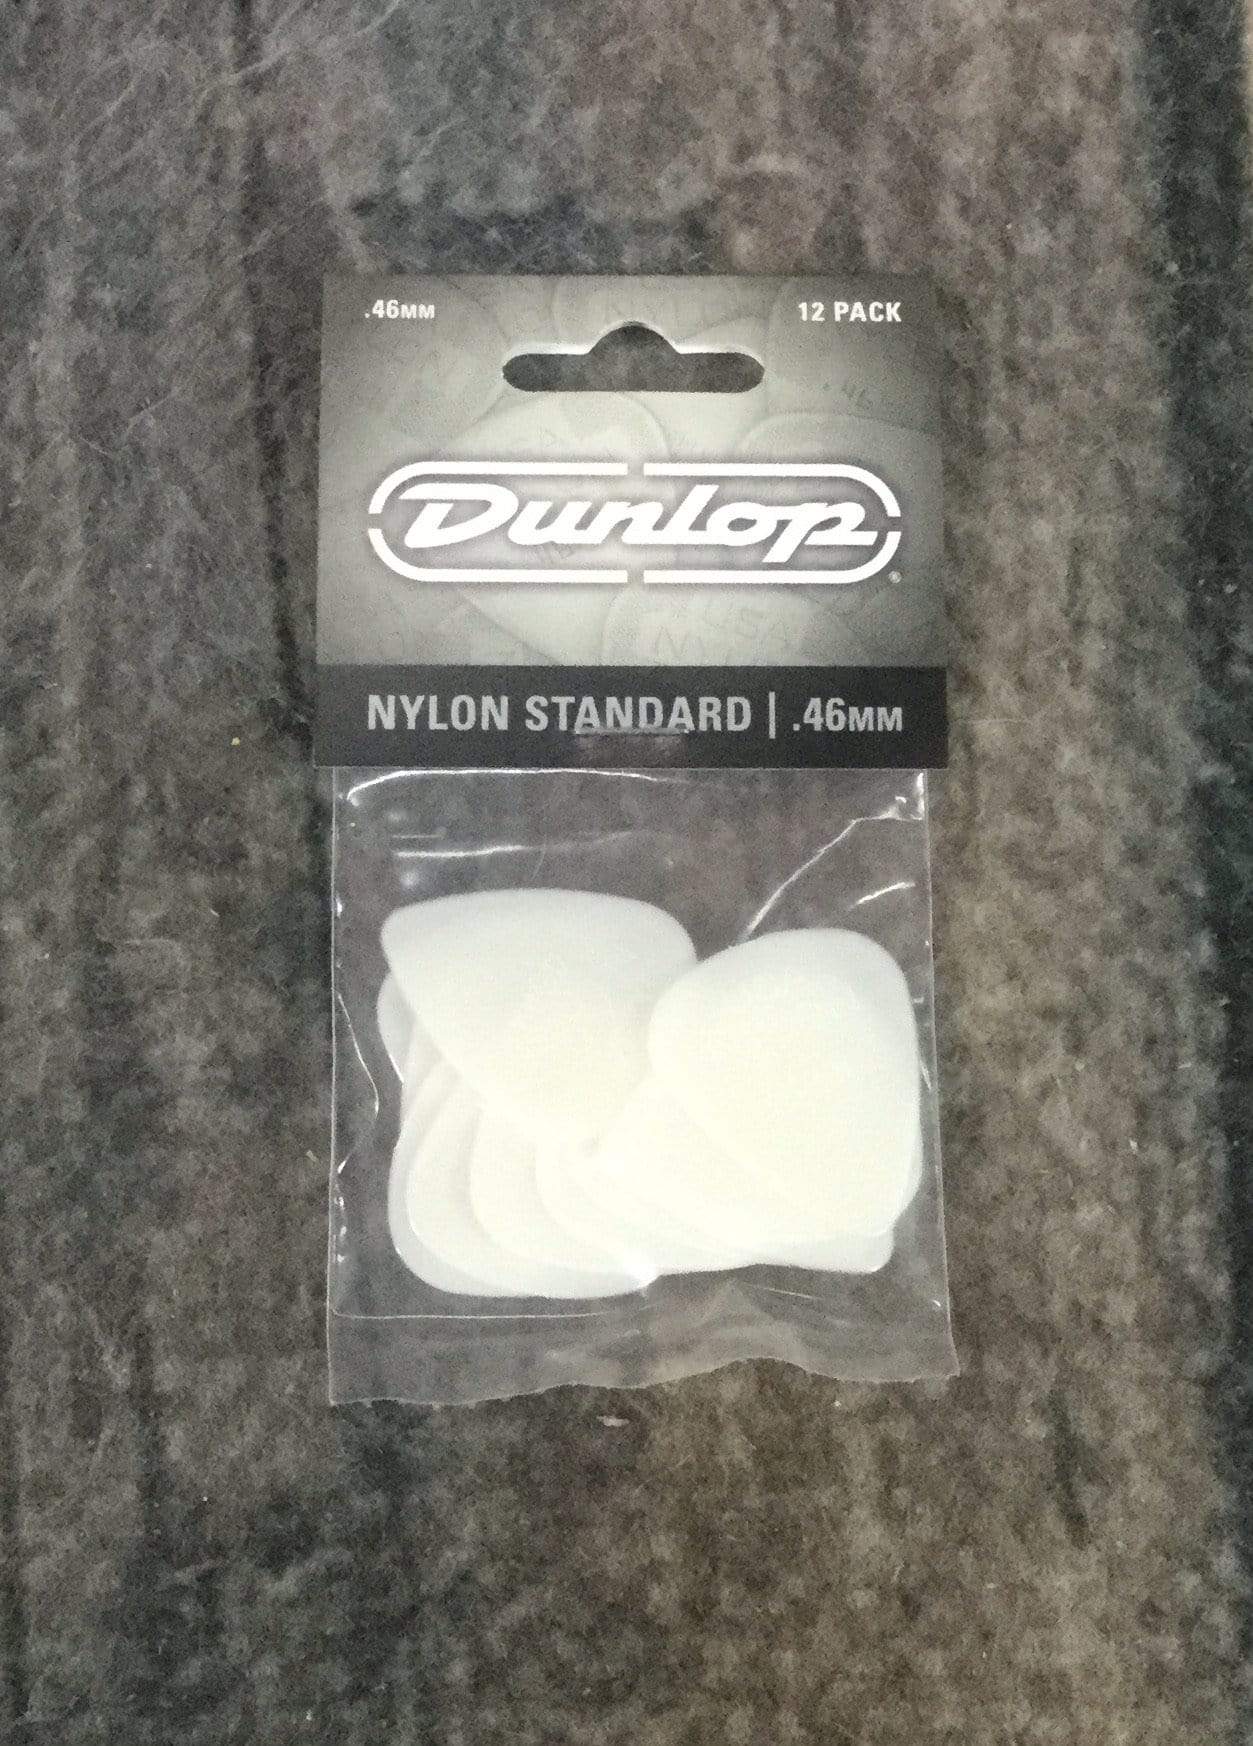 Dunlop Pick Dunlop Nylon Standard .46mm 44P.46 Pick Pack